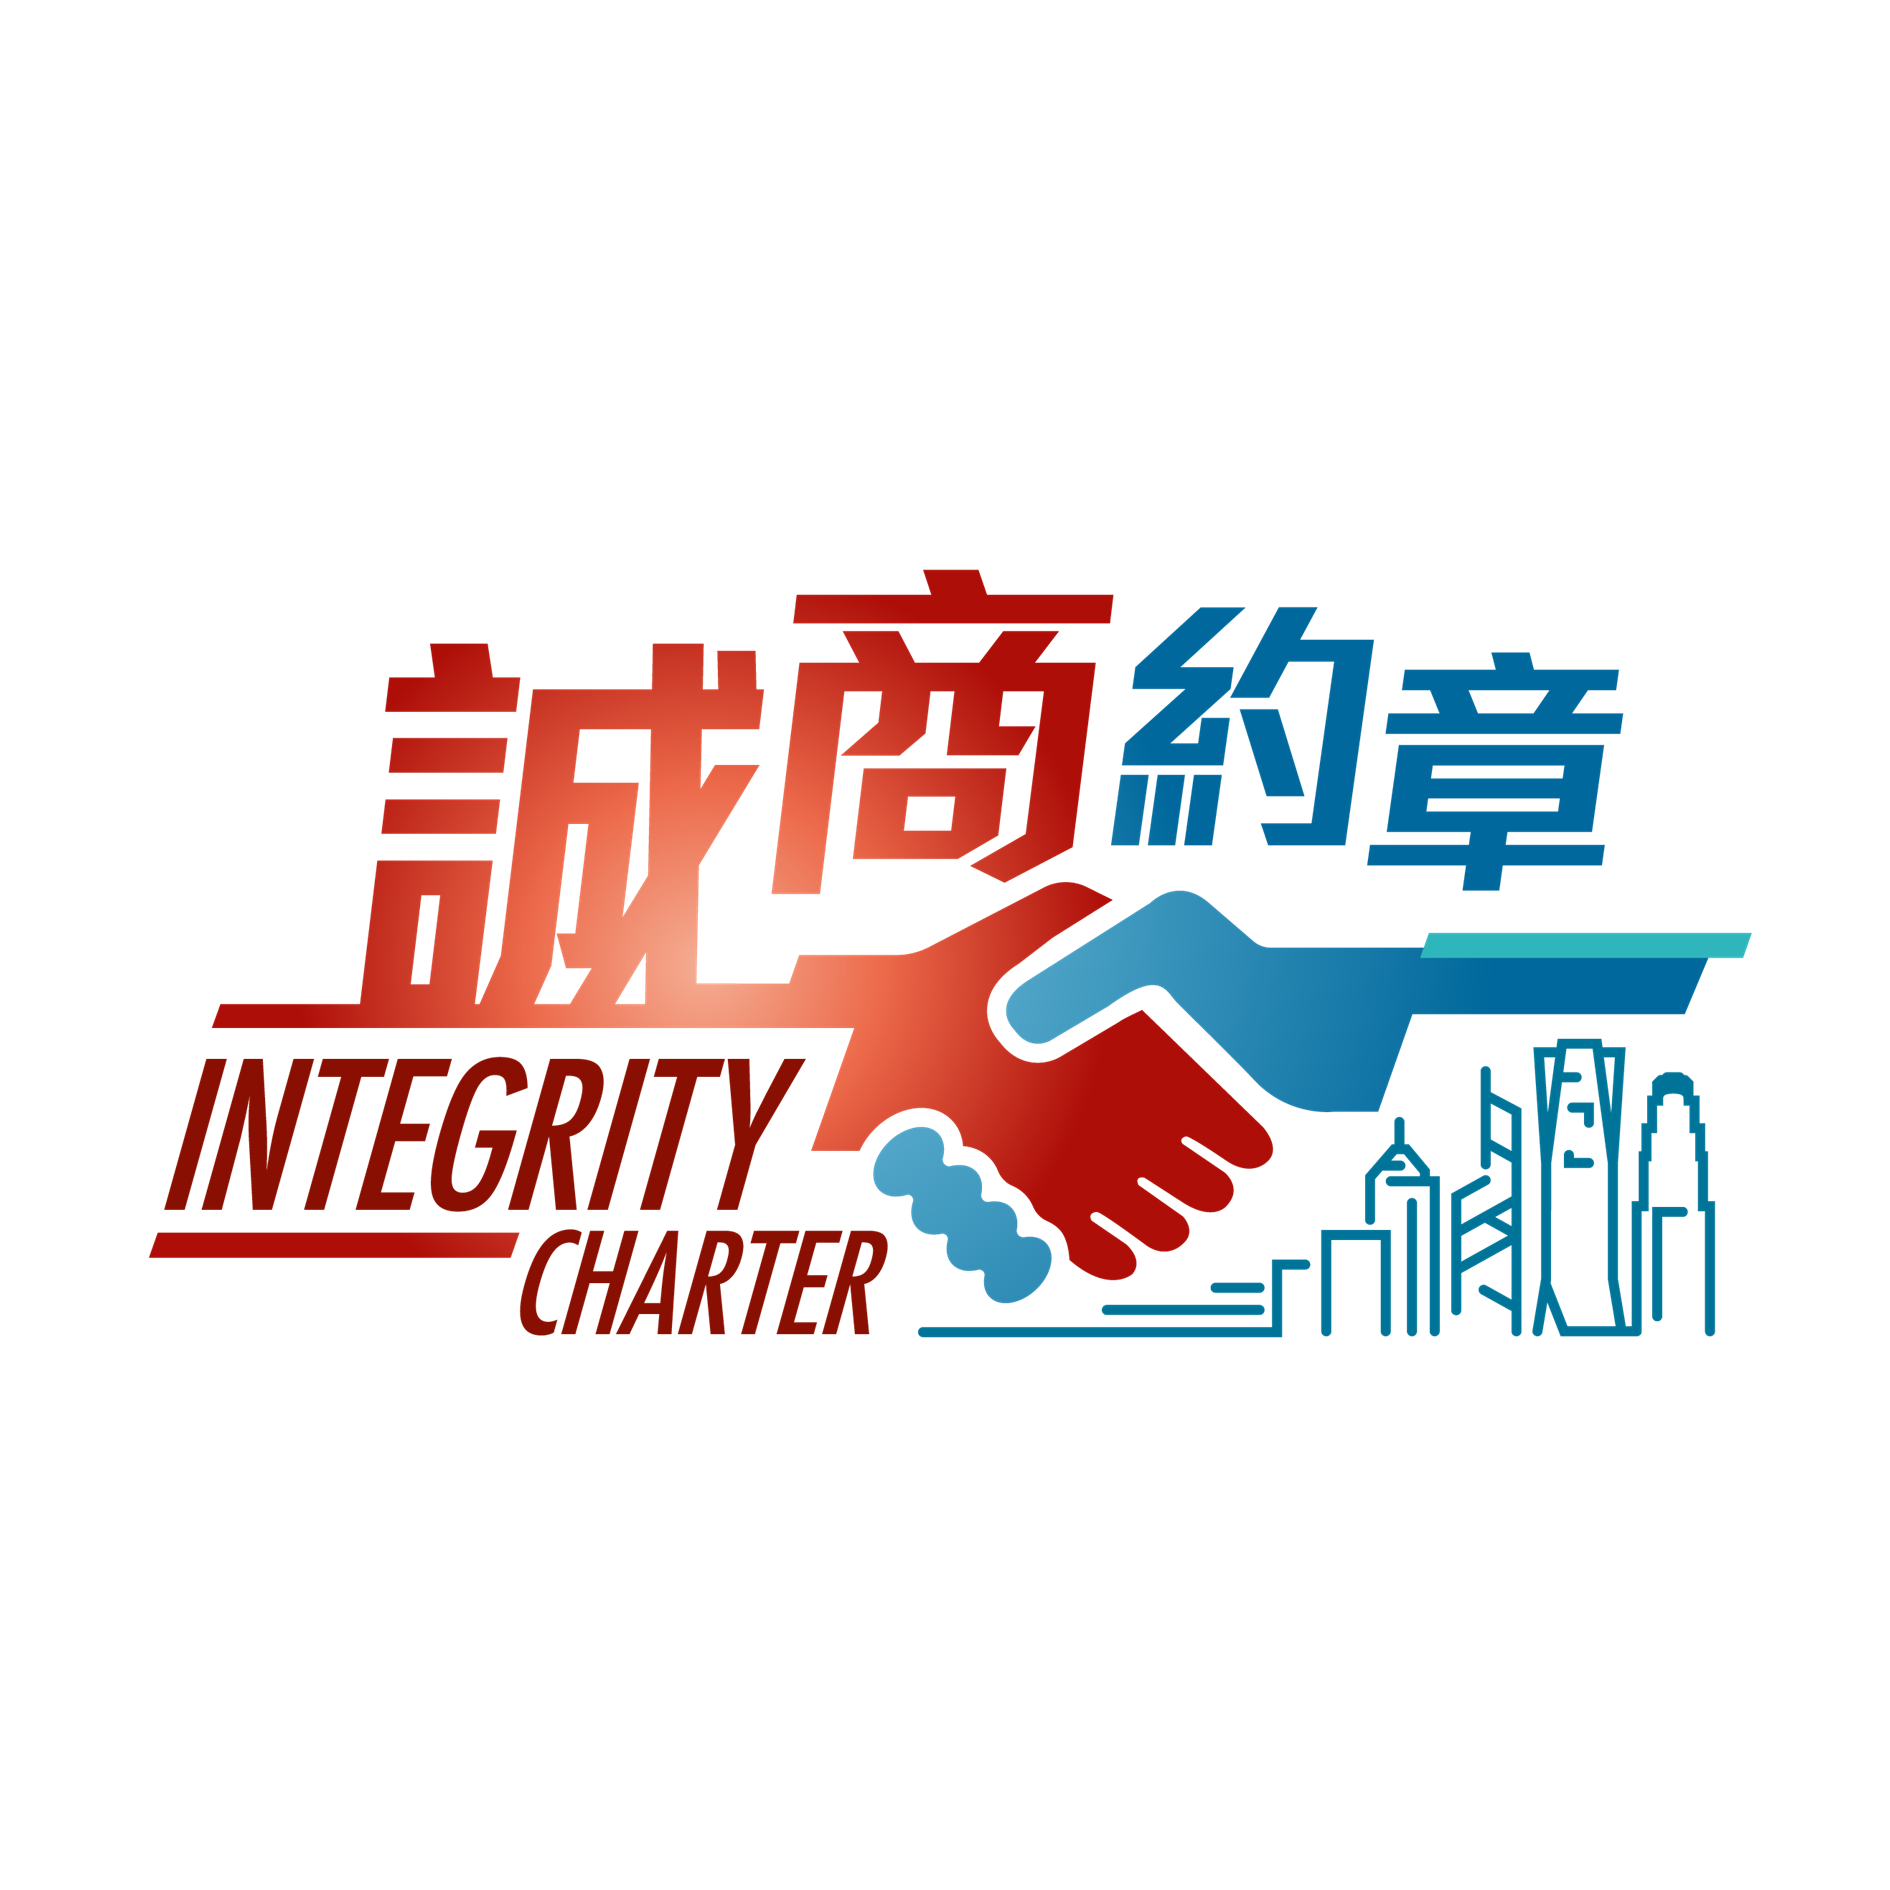 “Integrity Charter”